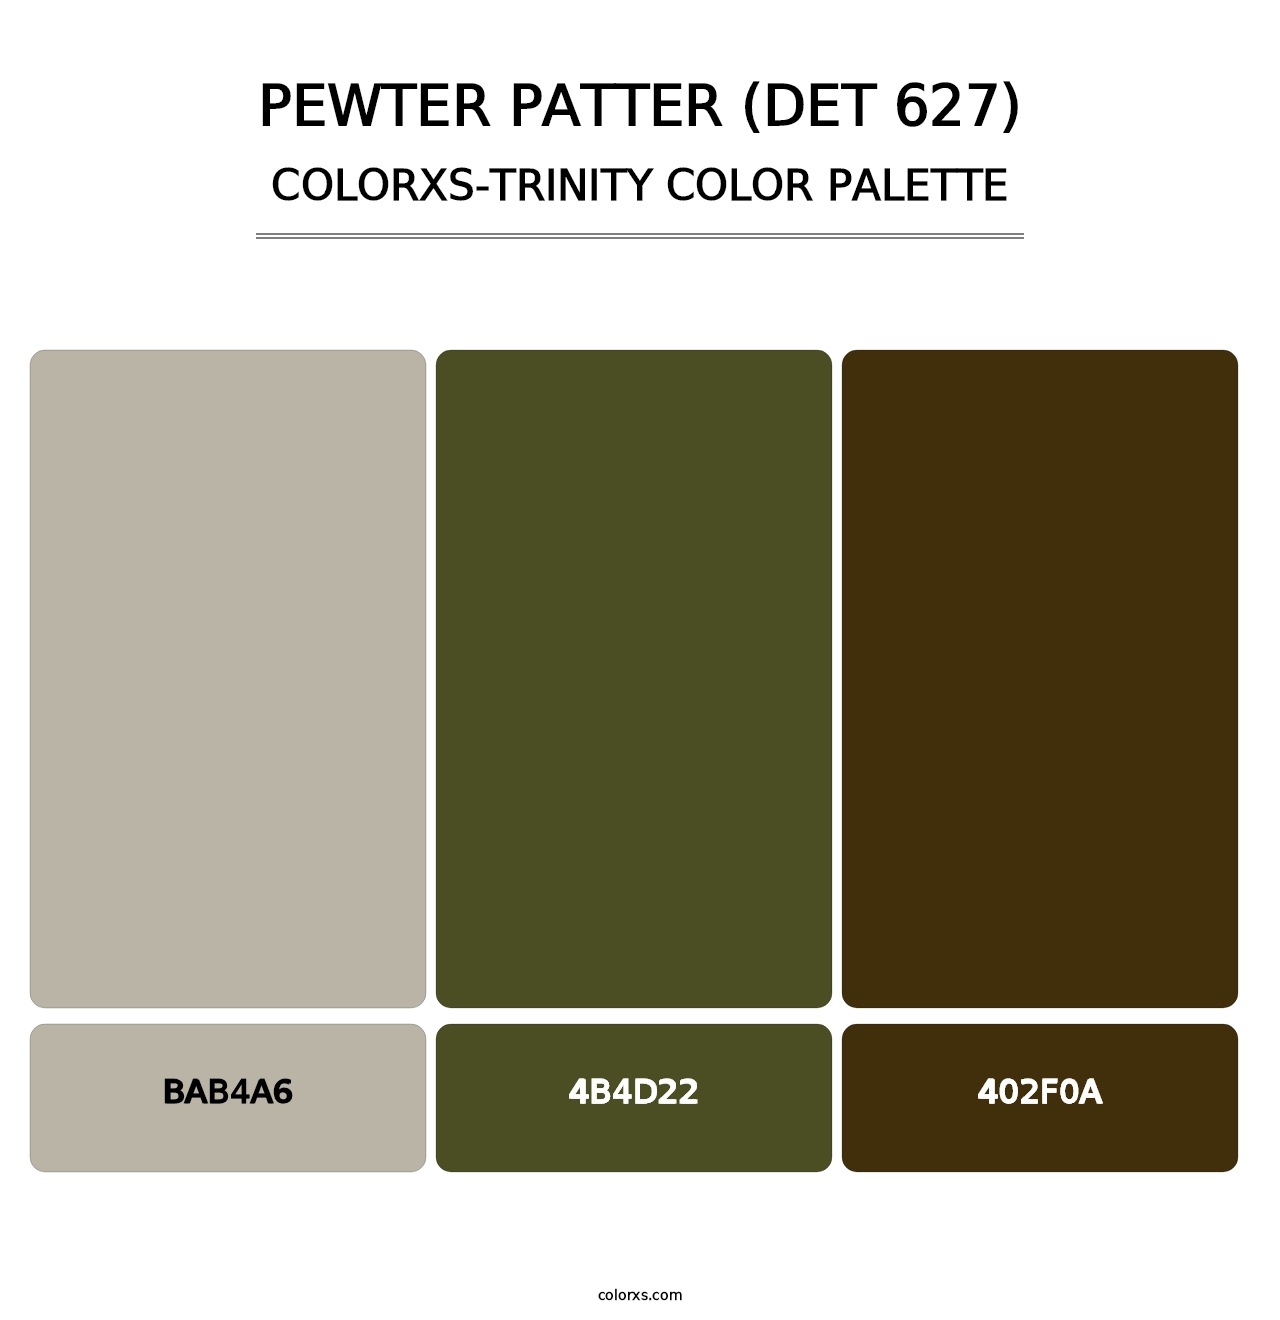 Pewter Patter (DET 627) - Colorxs Trinity Palette